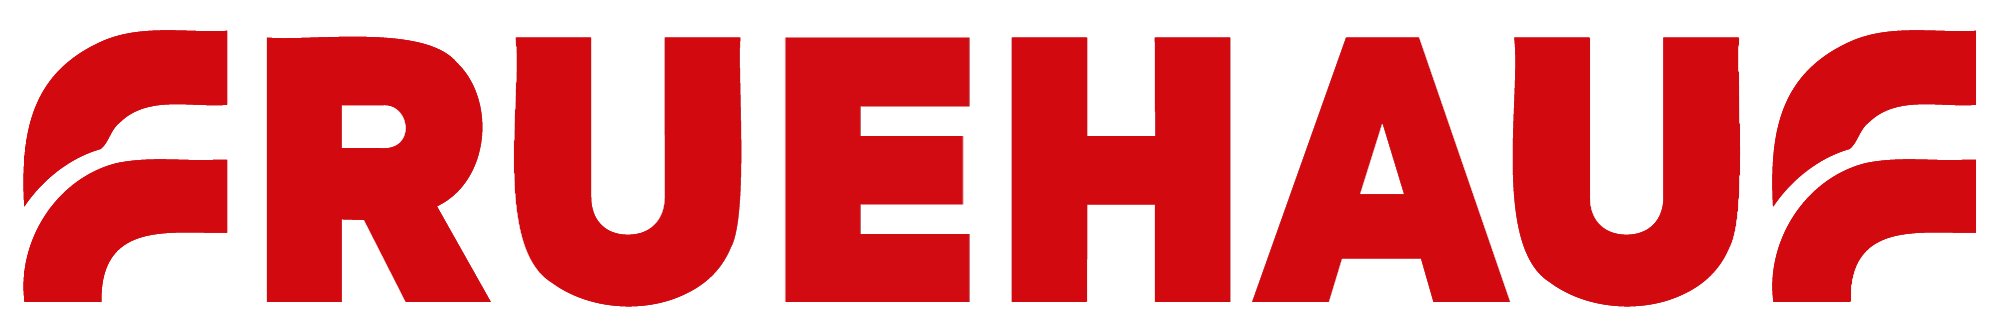 Fruehauf-red-logo-RGB